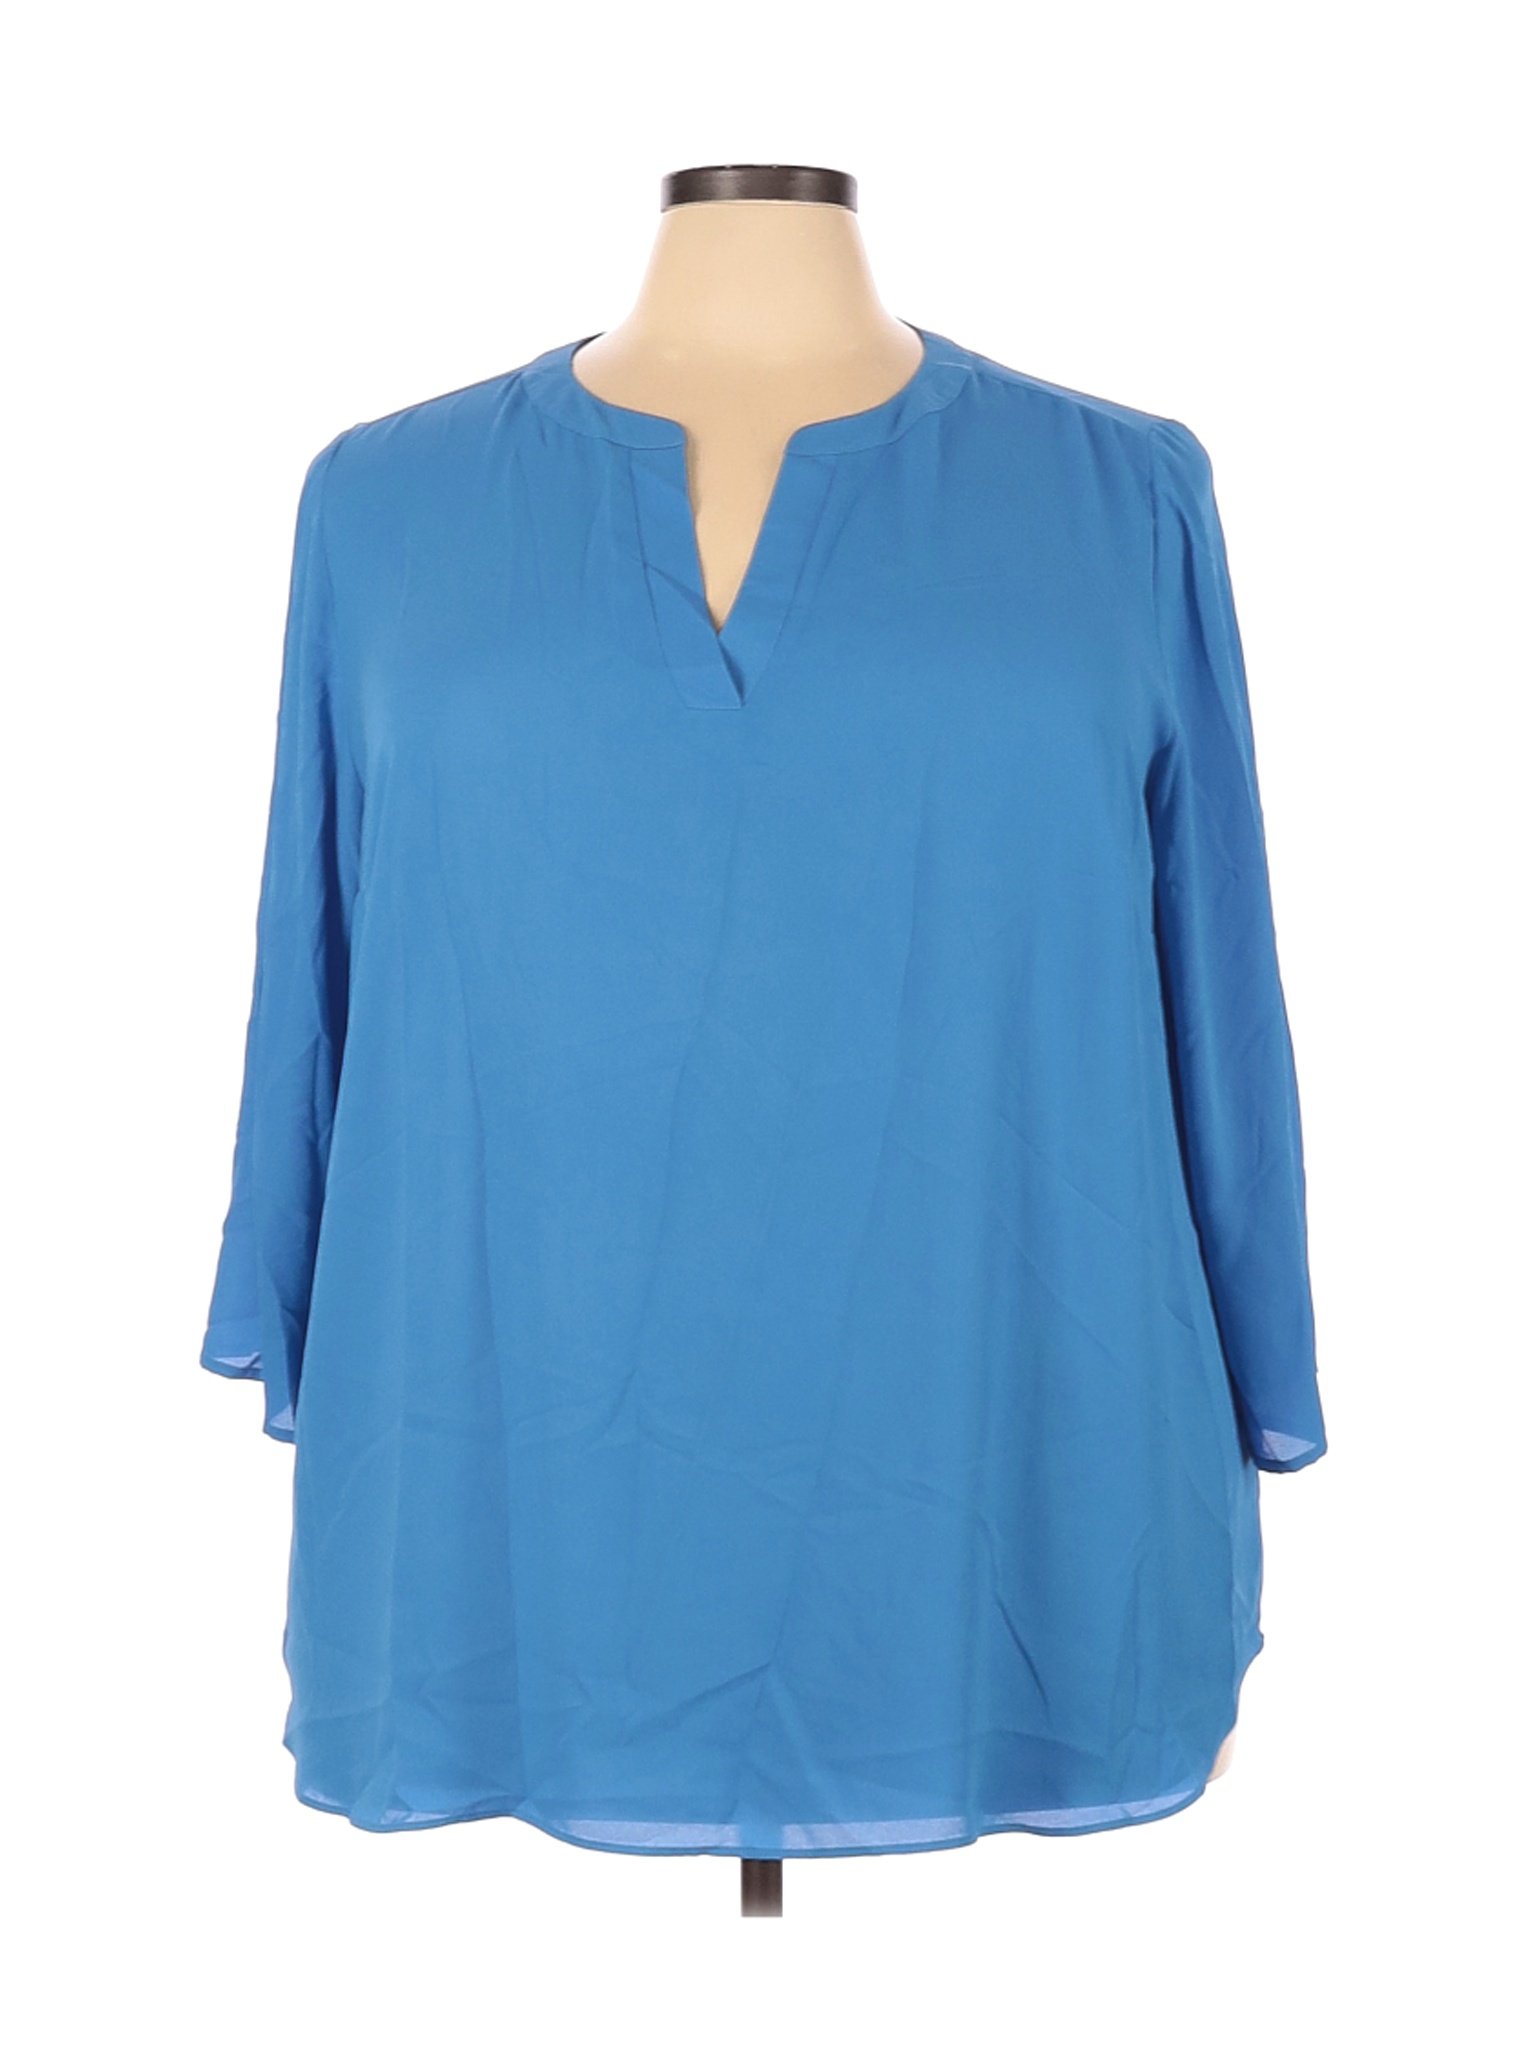 Chaus Women Blue Long Sleeve Blouse 3X Plus | eBay